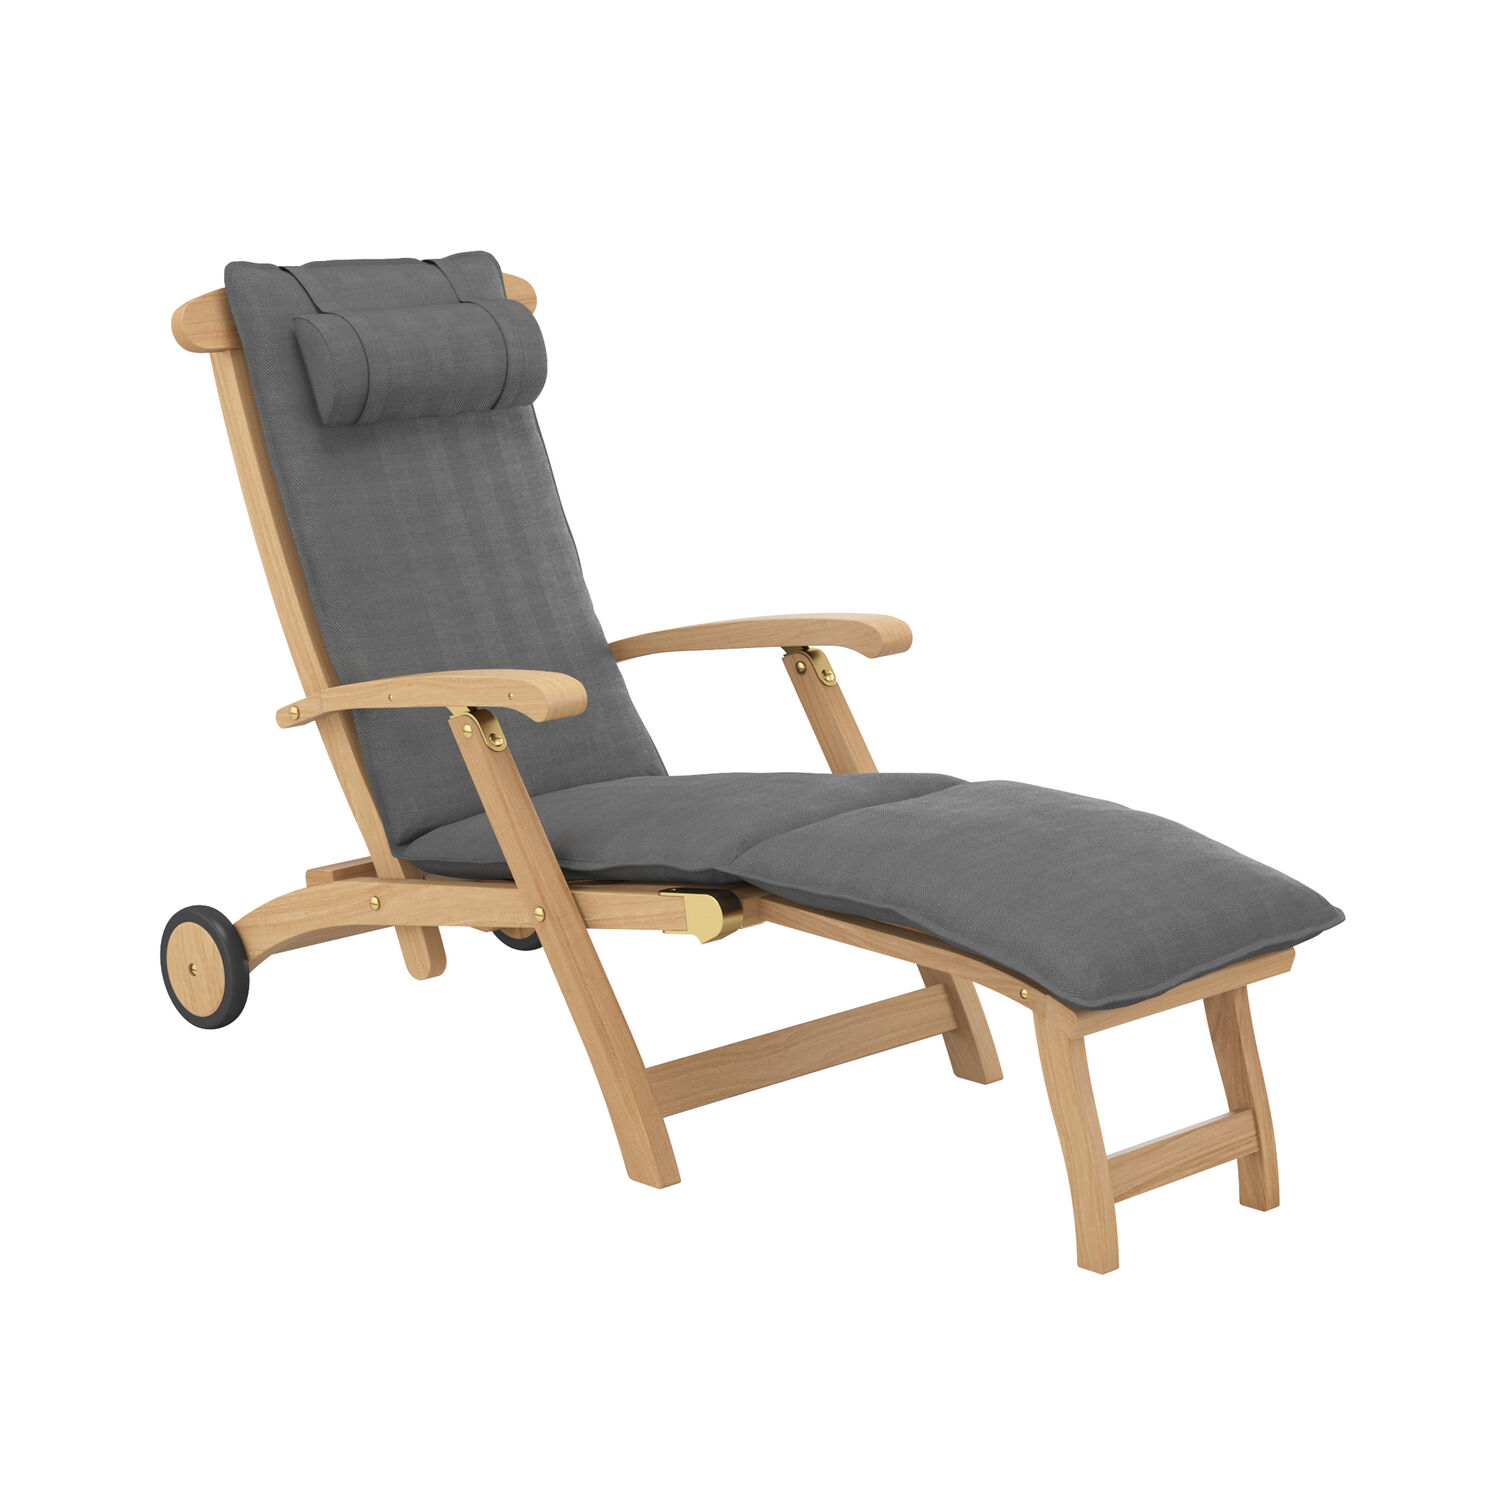 Auflage Royal Princess – Deck Chair, Dessin "Shadow" & mehr - Garpa